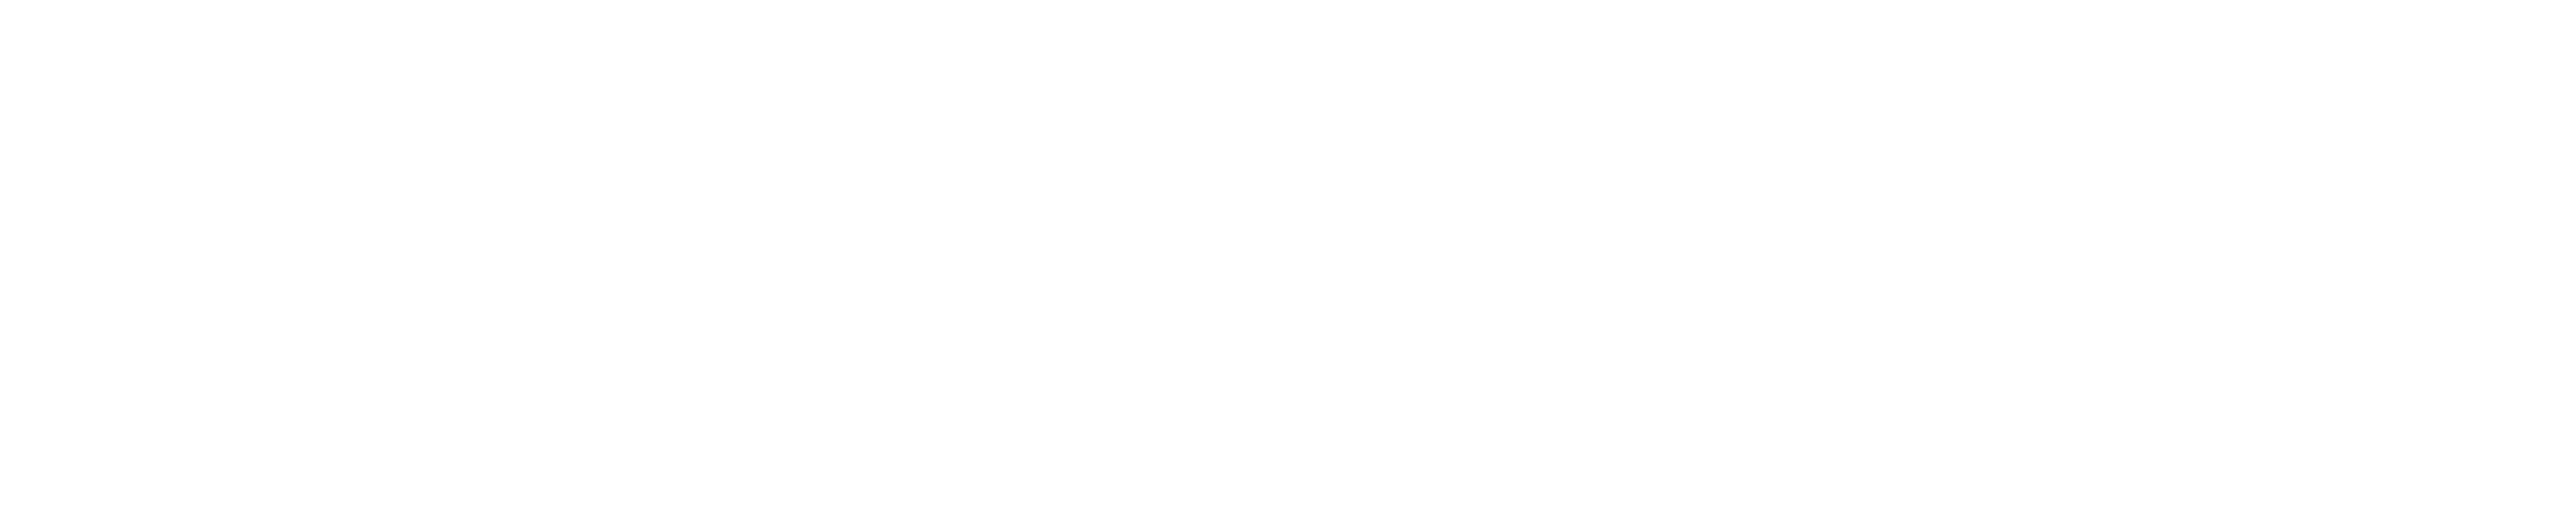 Closets Unlimited logo